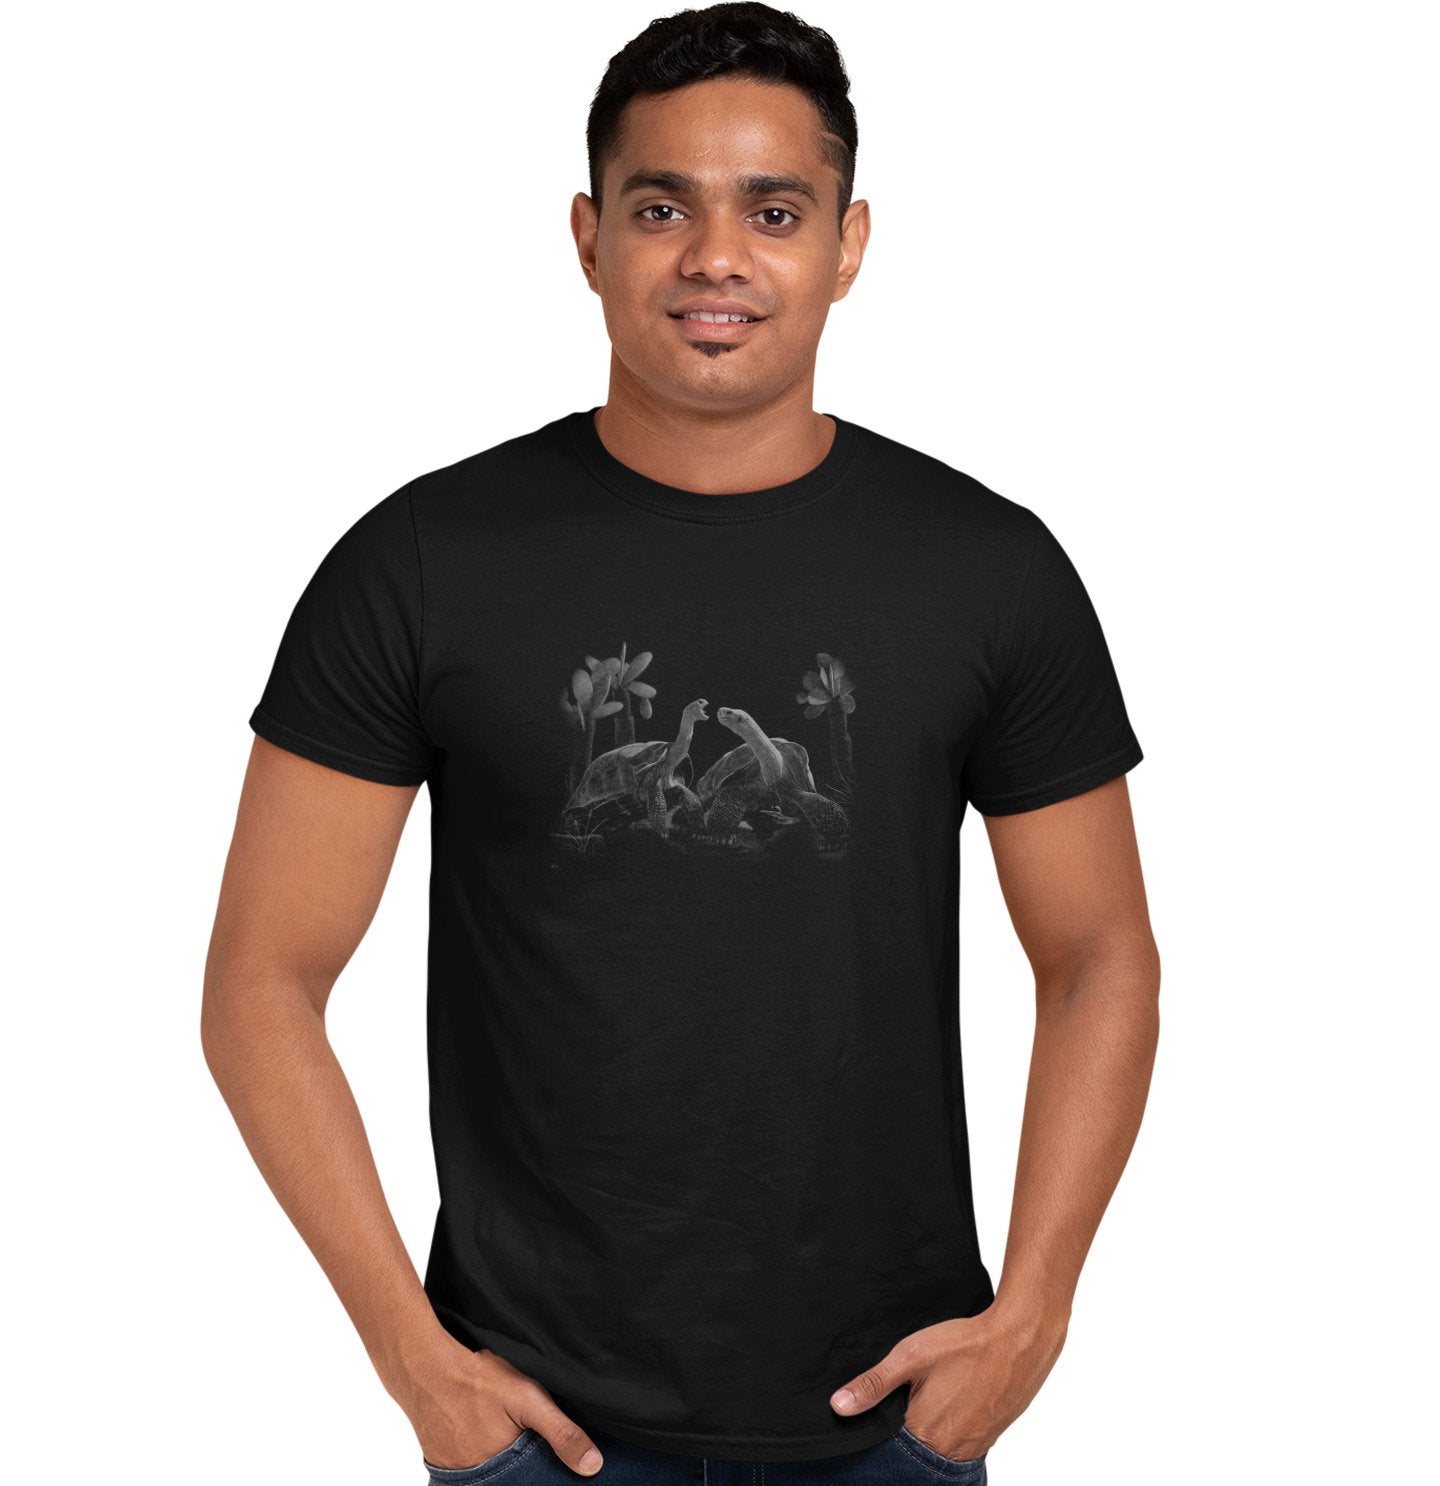 Galapagos Tortoise on Black - Adult Unisex T-Shirt